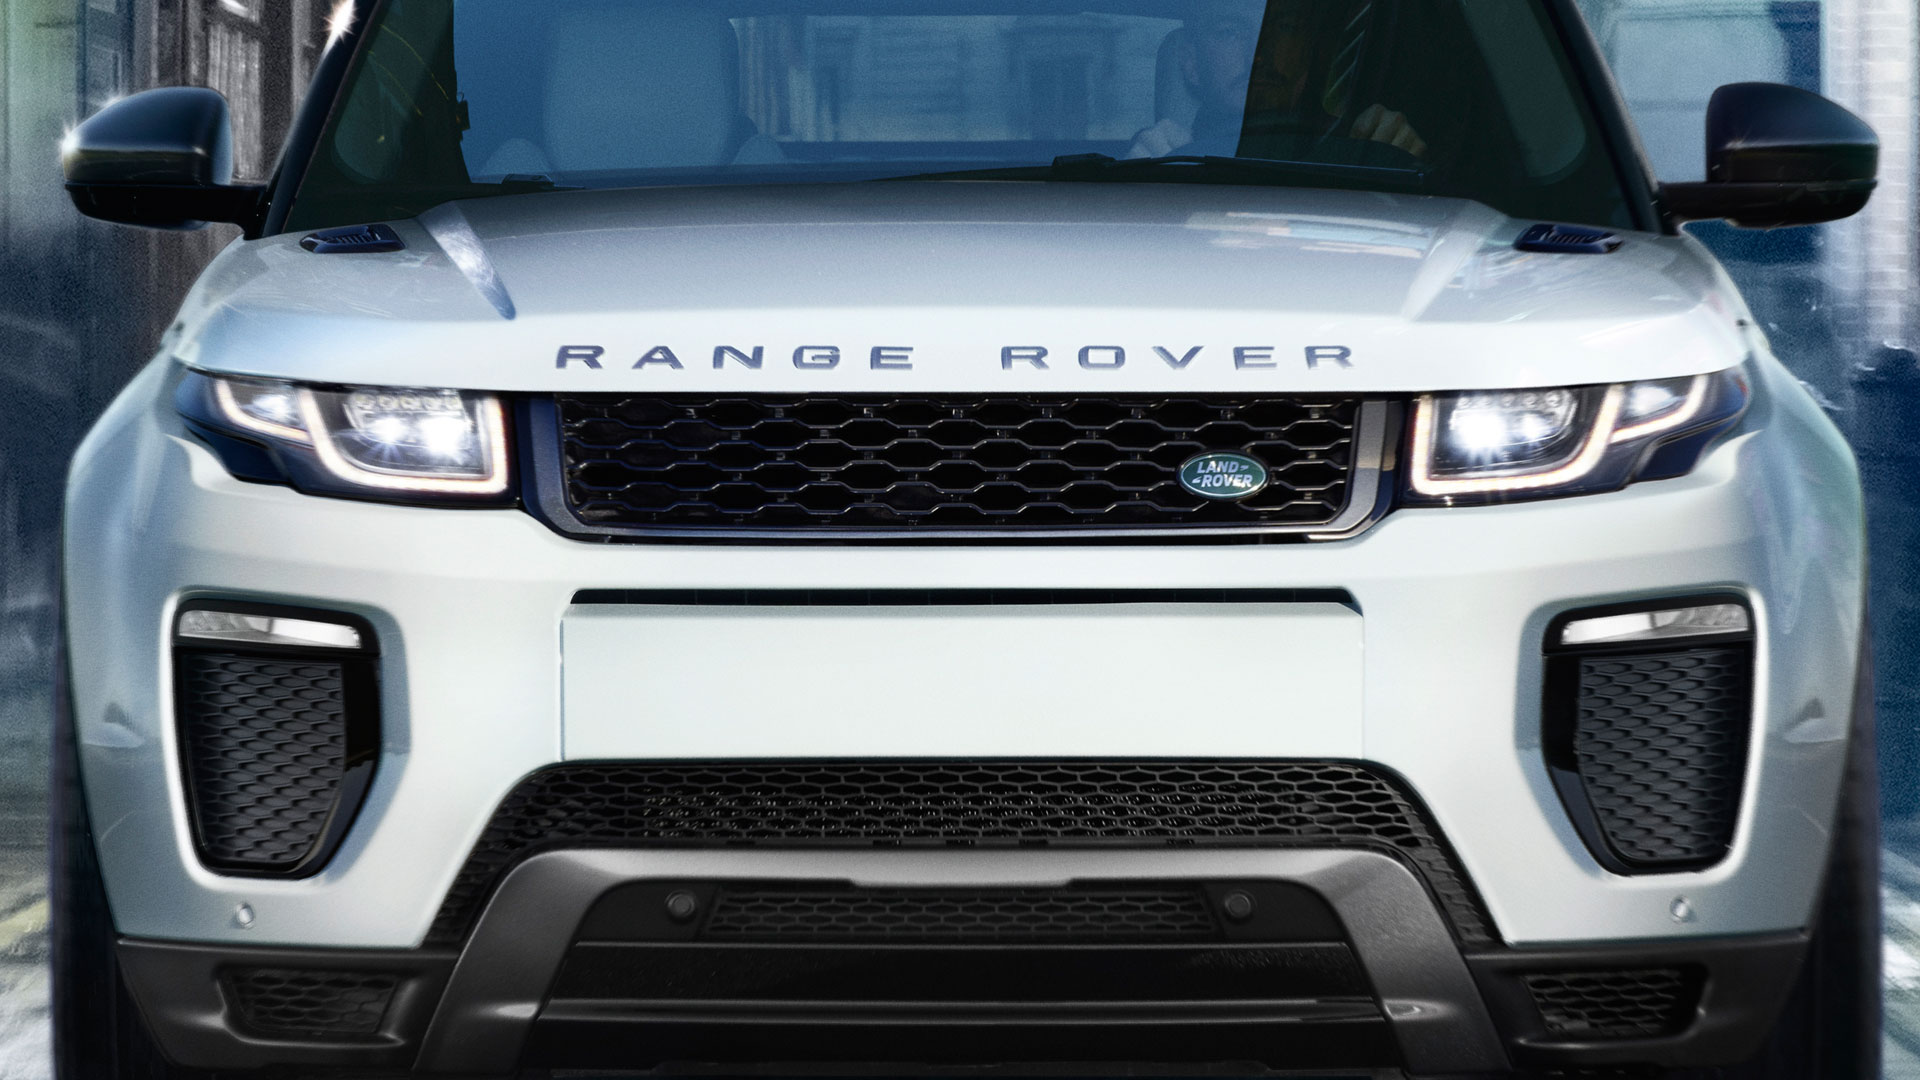 Land Rover Evoque 2016 Pure Exterior